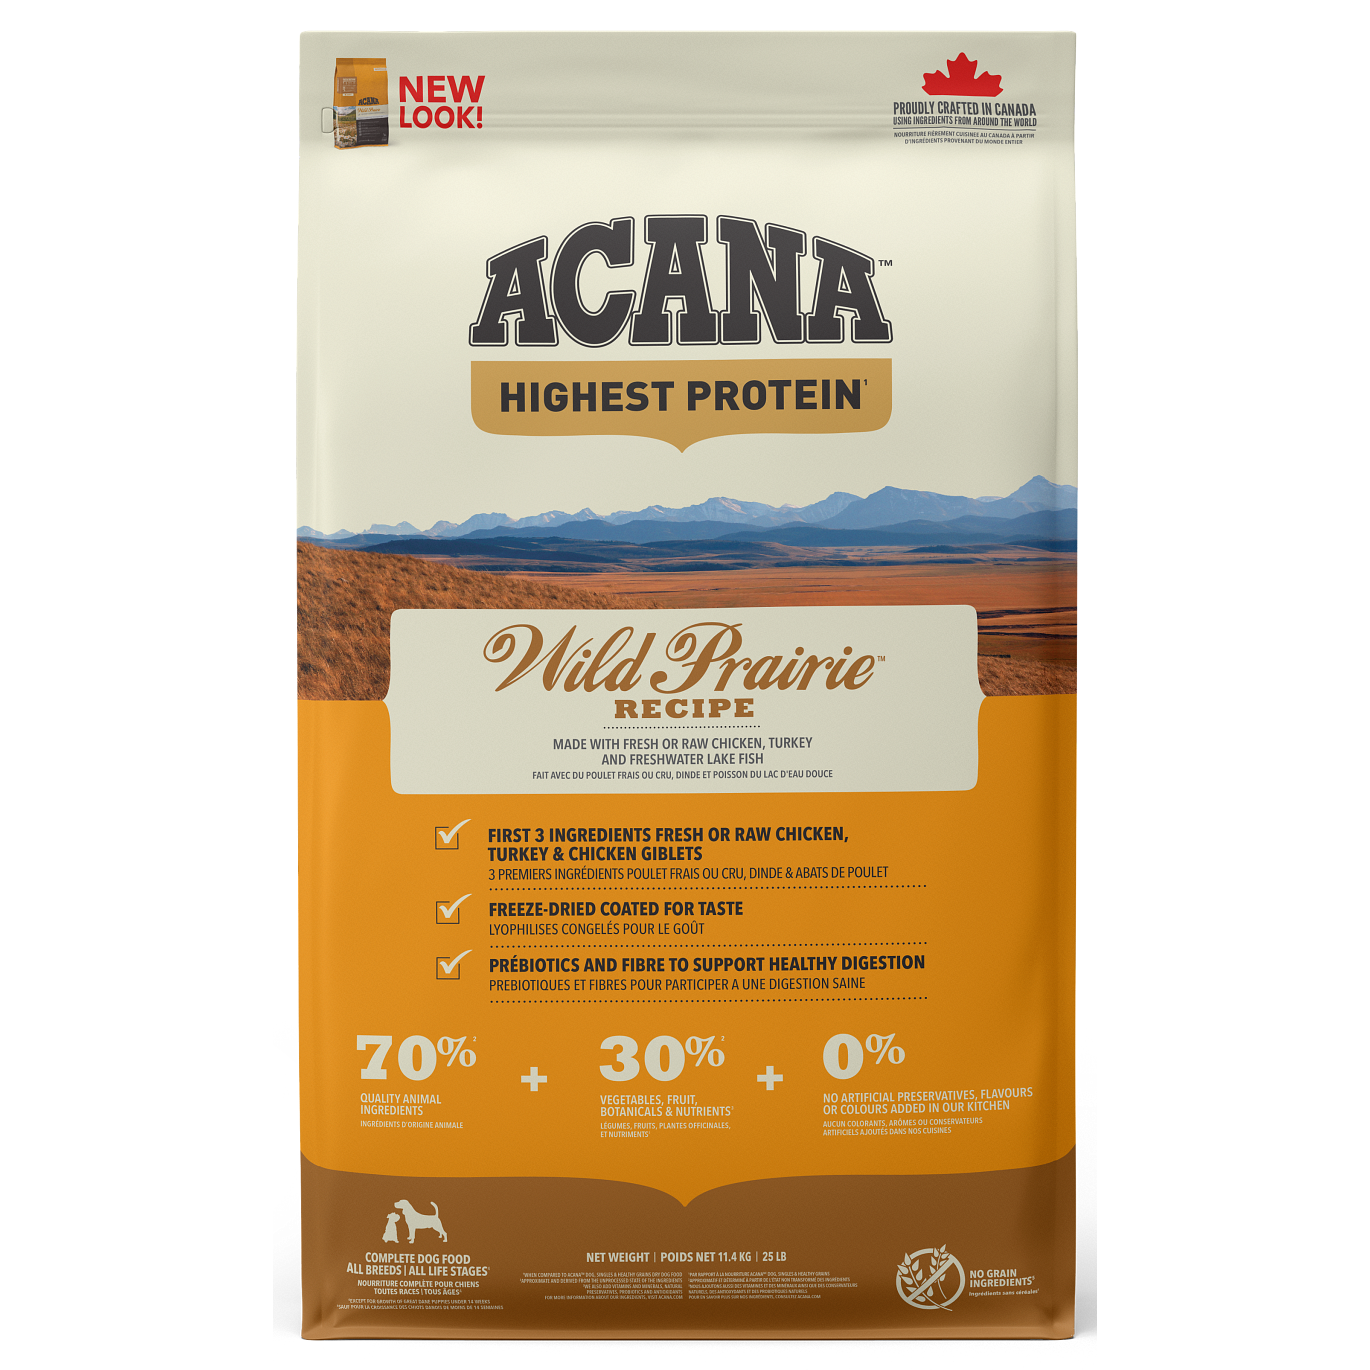 ACANA® HIGHEST PROTEIN Wild Prairie Recipe